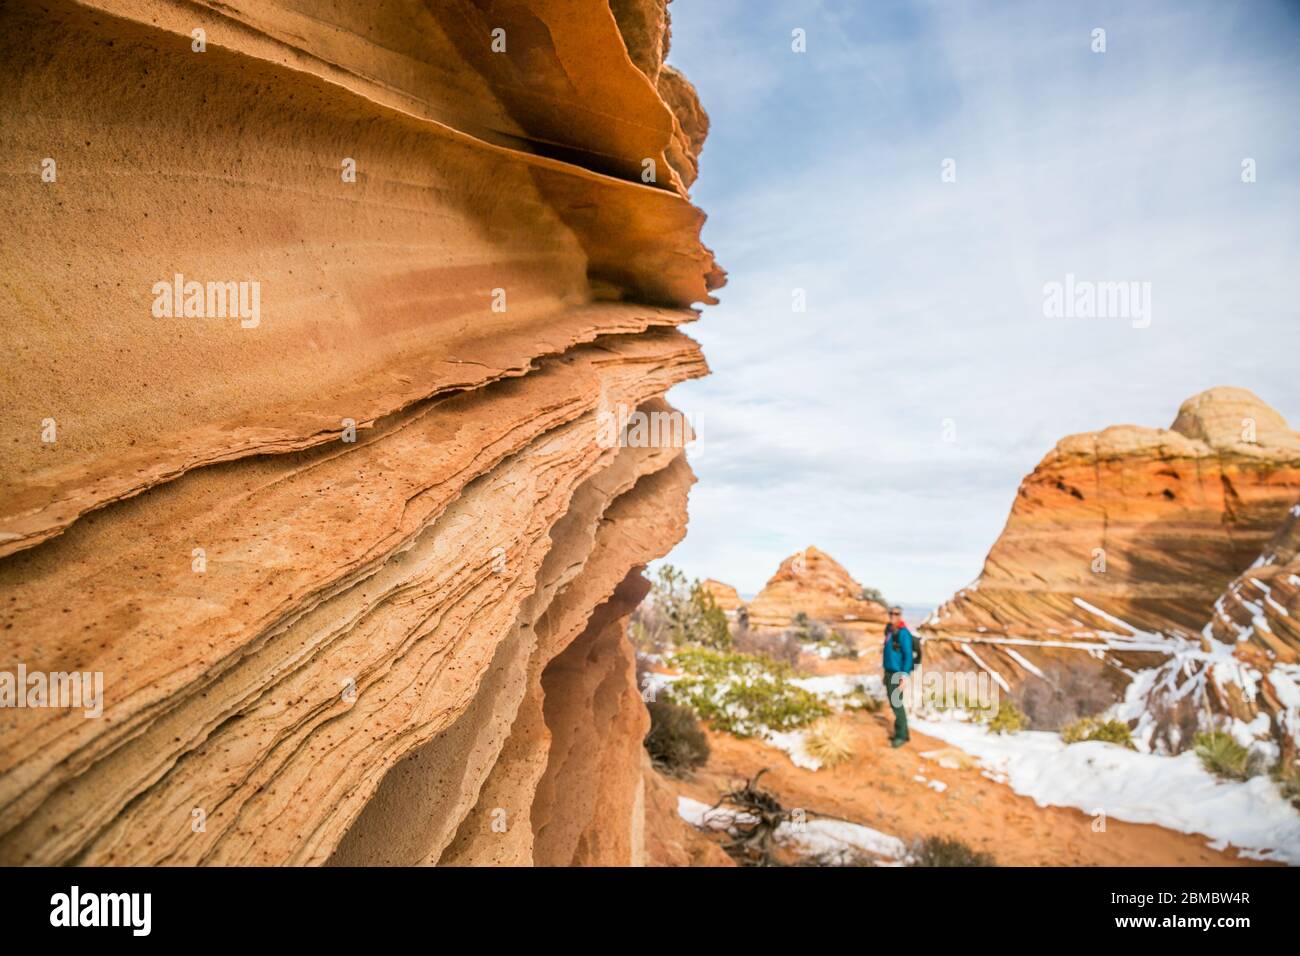 Sandstone lace rock and hiker for scale, Vermilion Cliffs Stock Photo